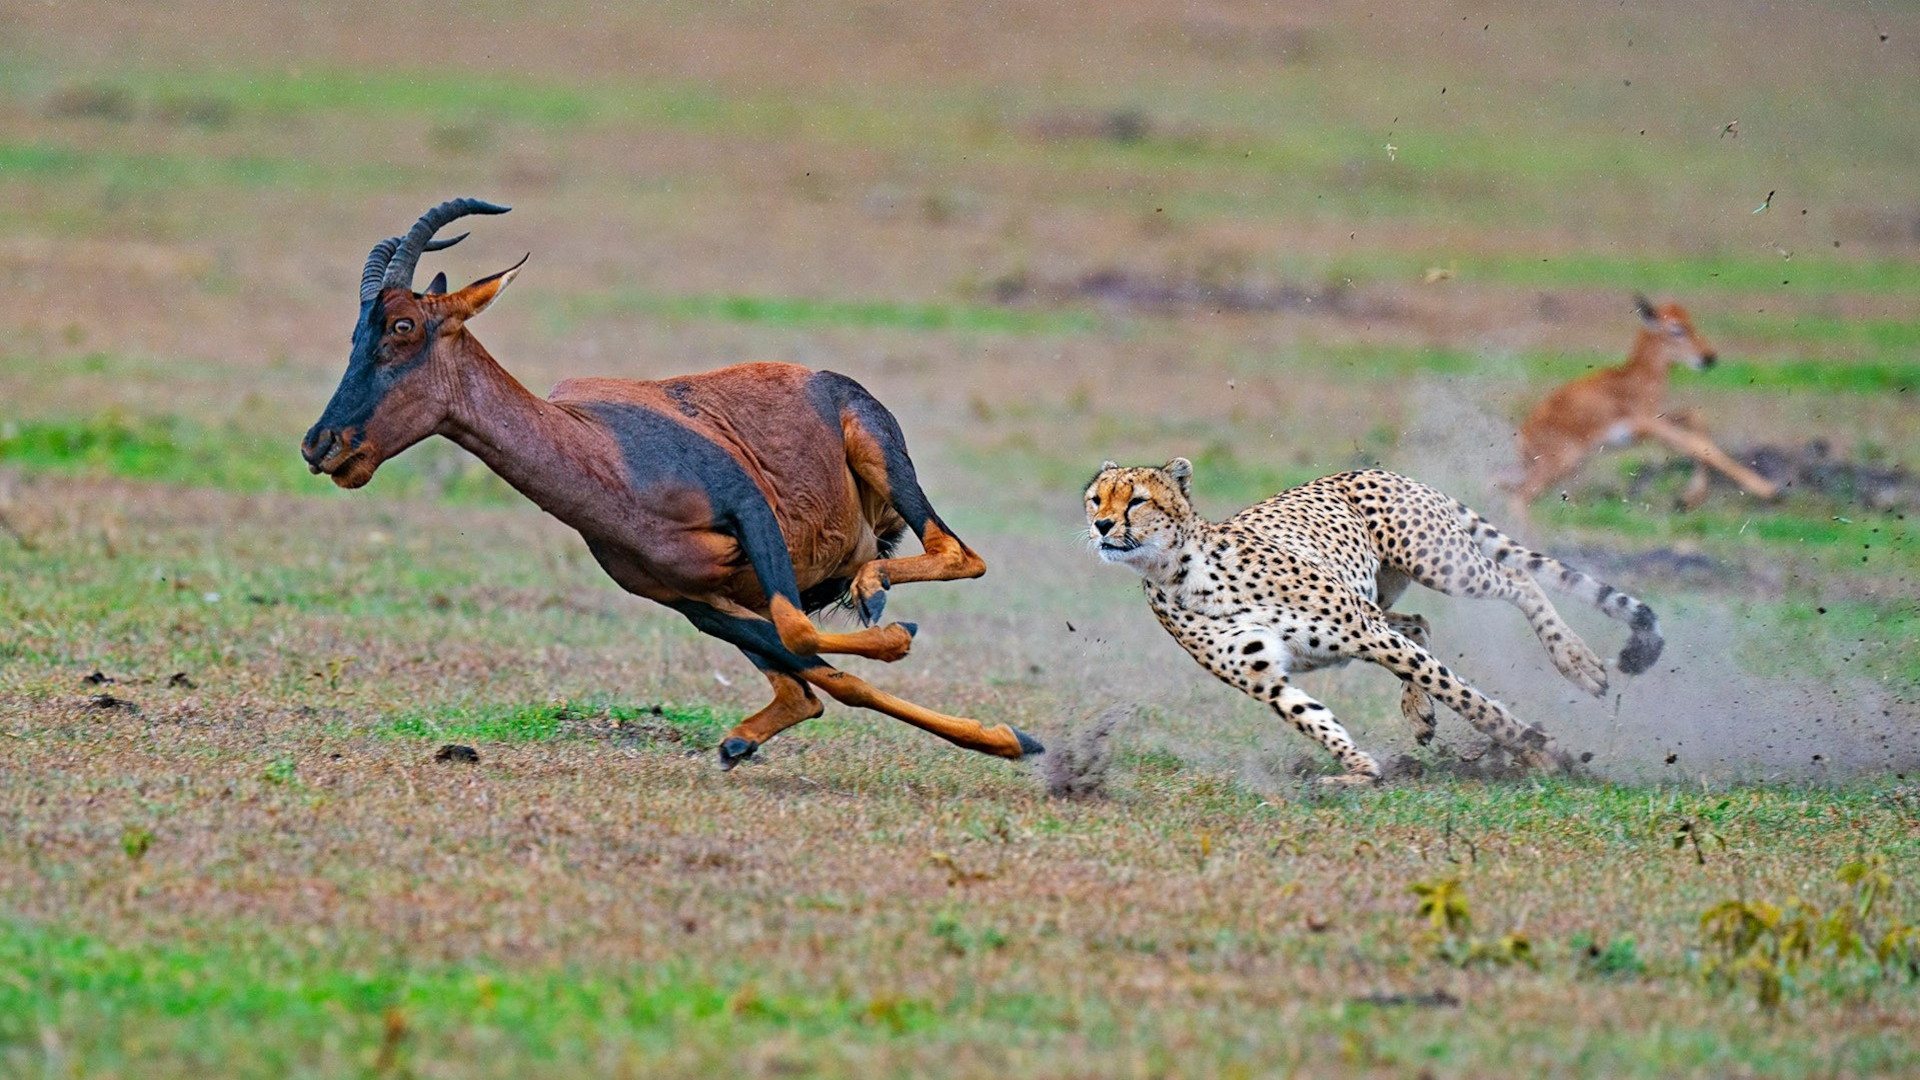 Cheetah Chasing Prey by Dhritiman Mukherjee